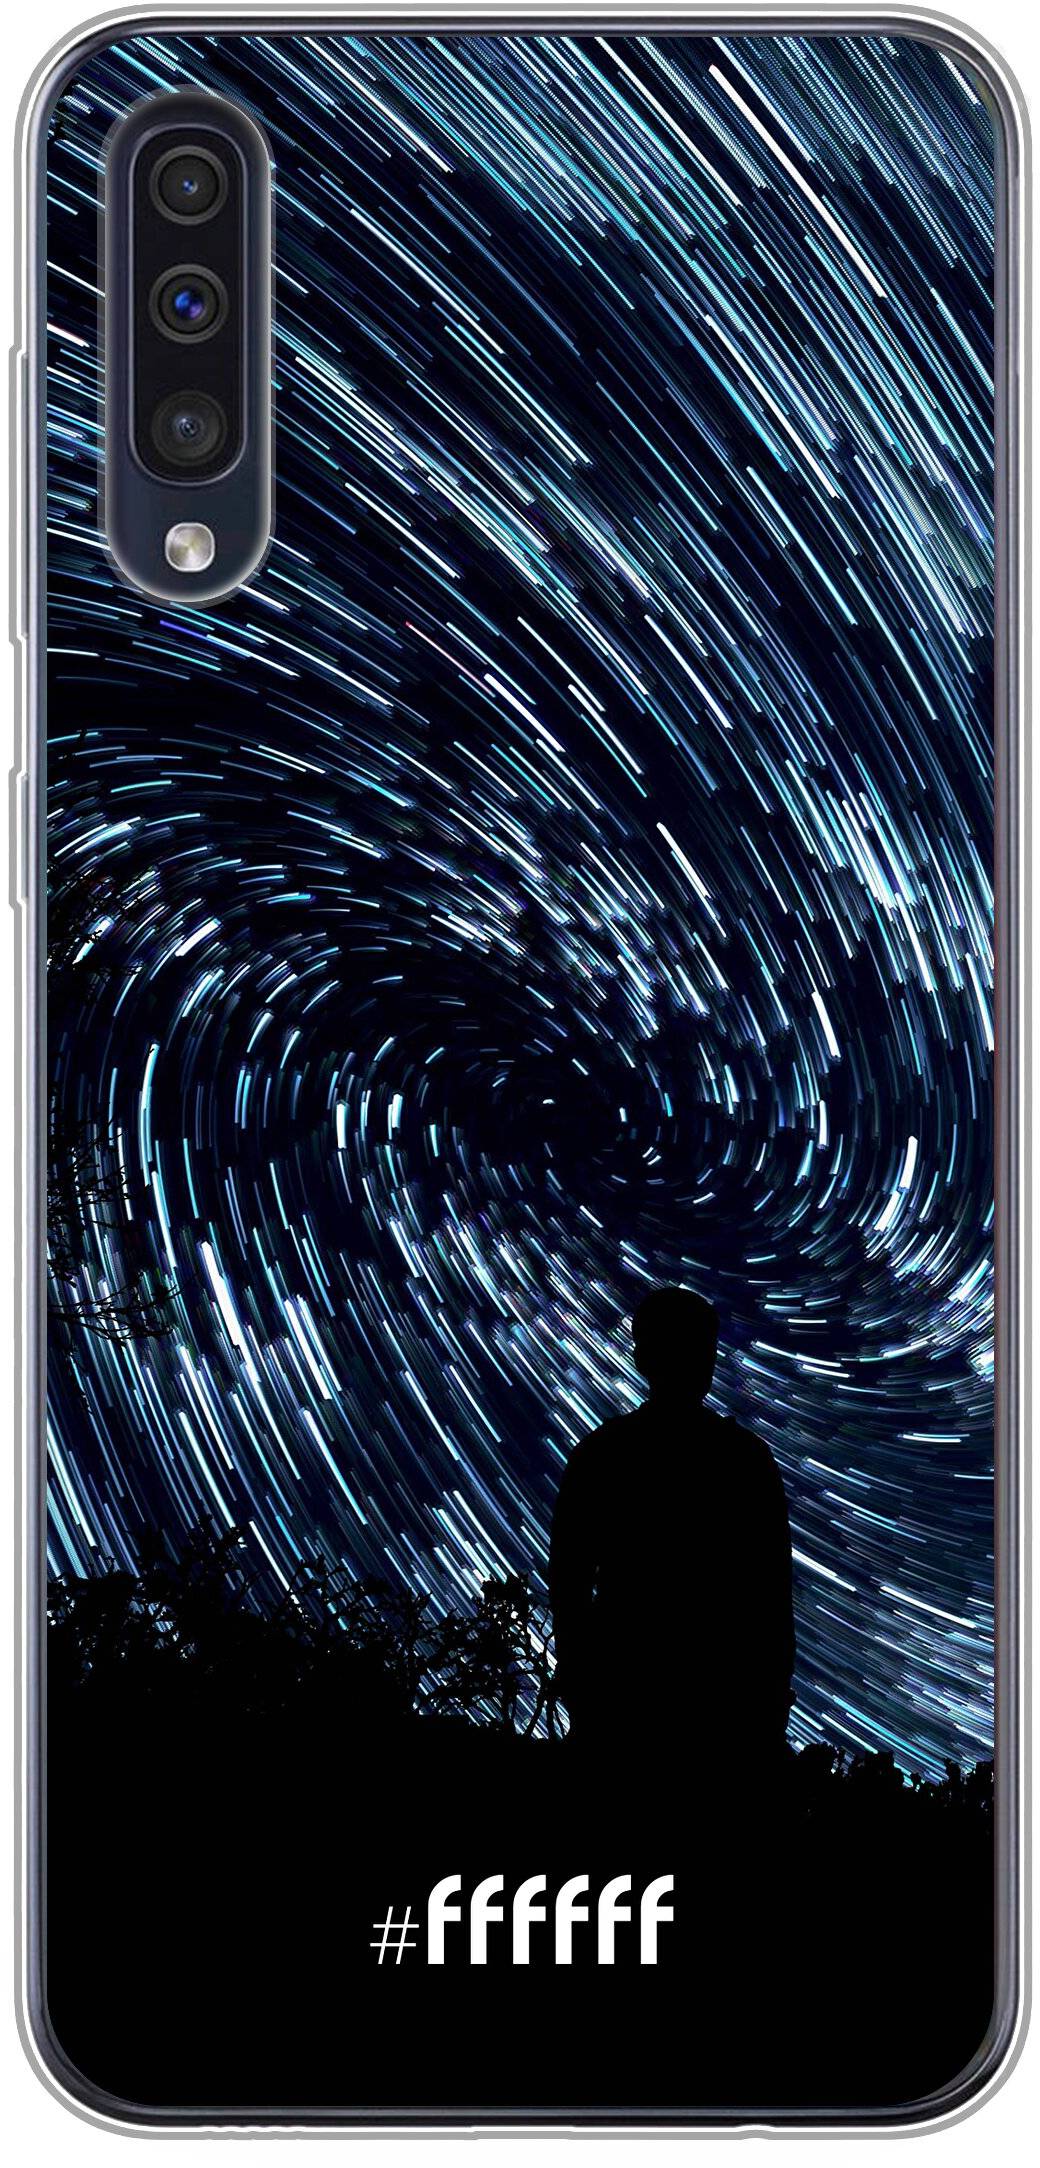 Starry Circles Galaxy A40